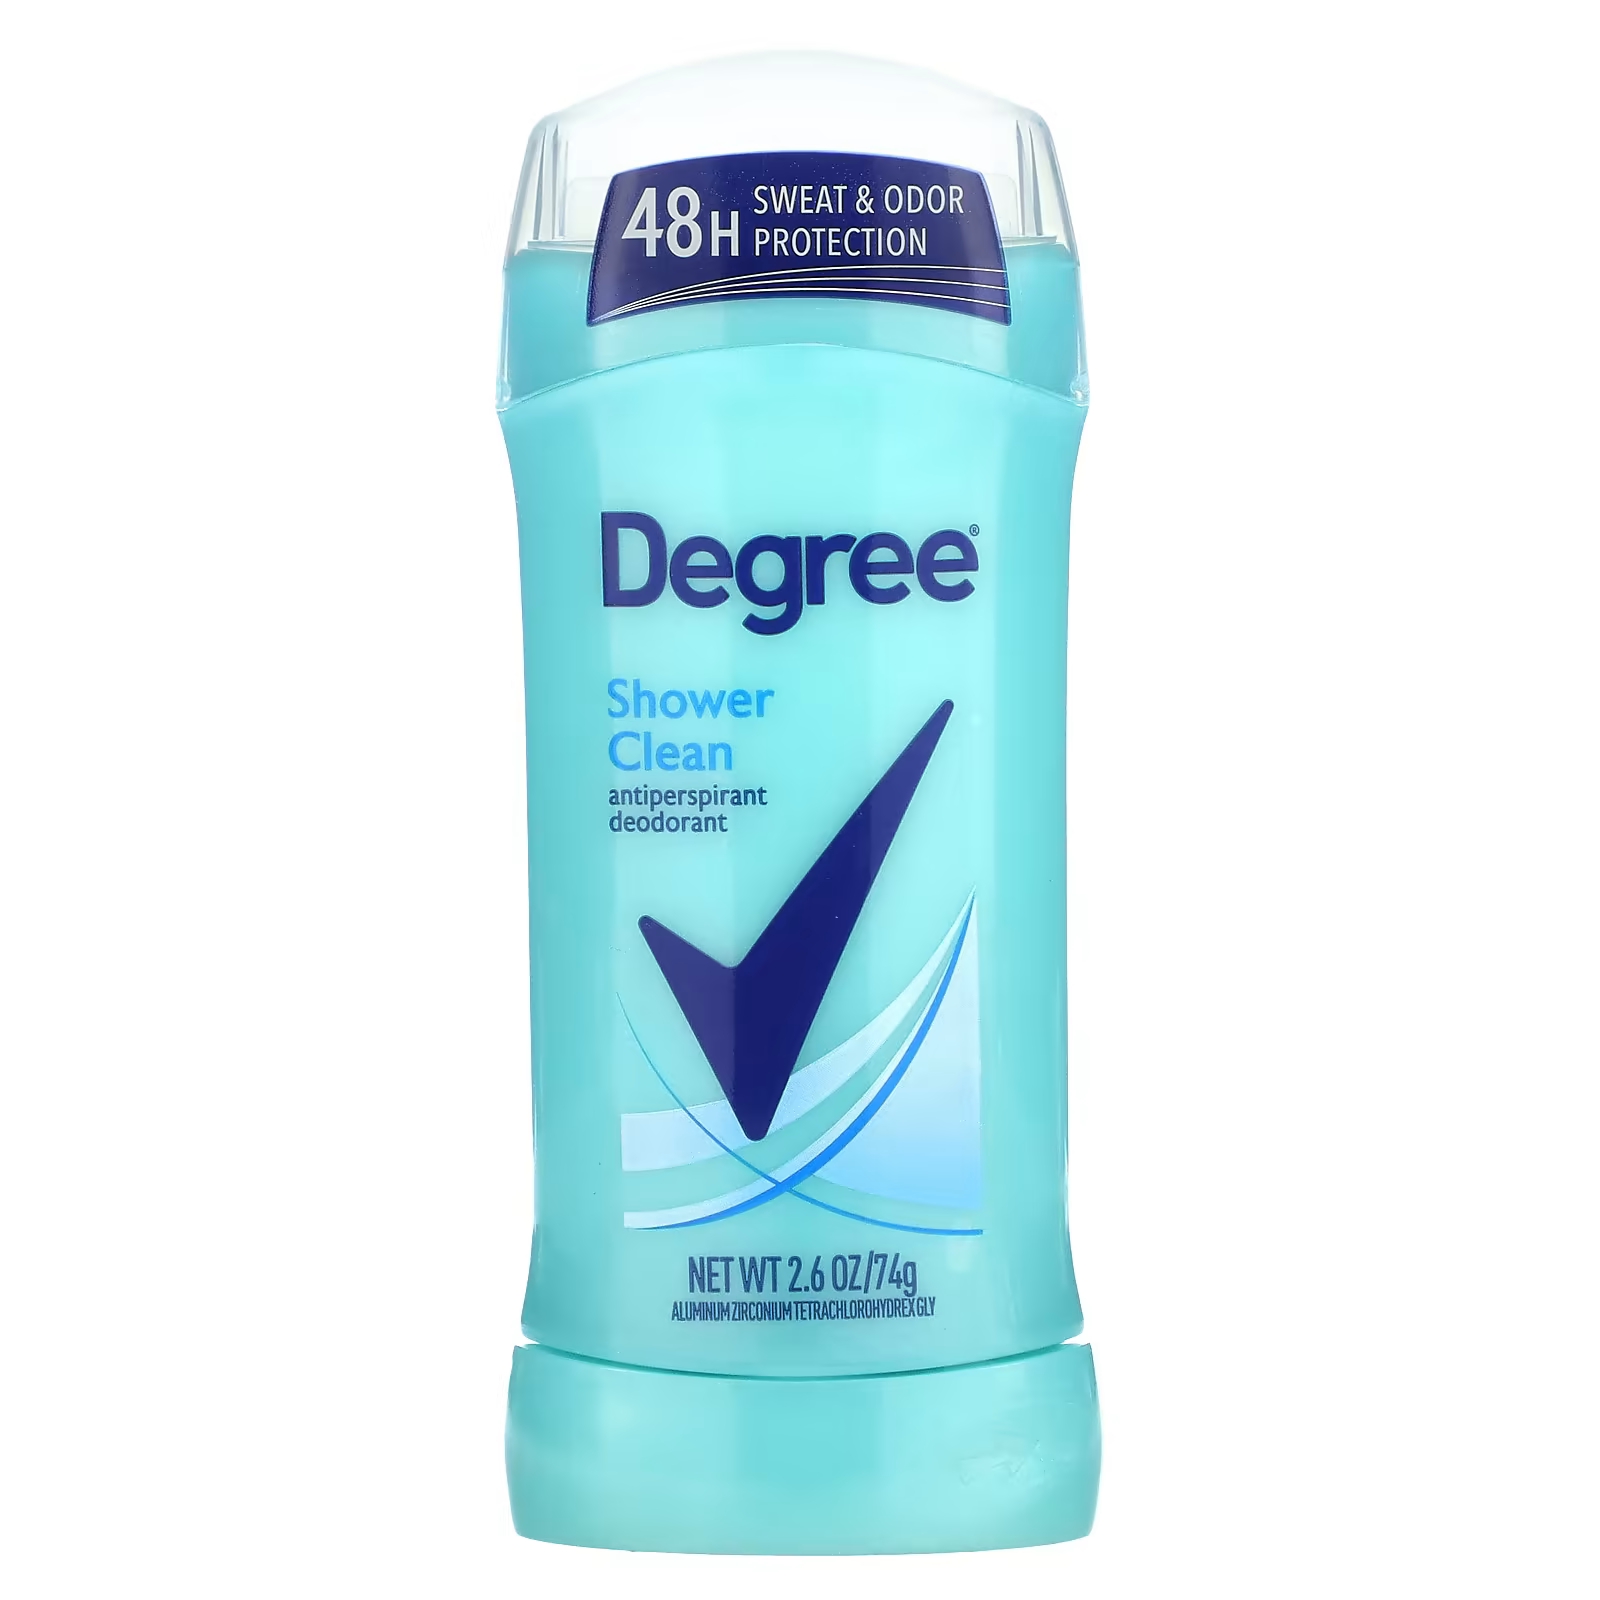 Дезодорант-антиперспирант Degree Deodorant Clean для душа degree дезодорант антиперспирант очищение для душа 74 г 2 6 унции